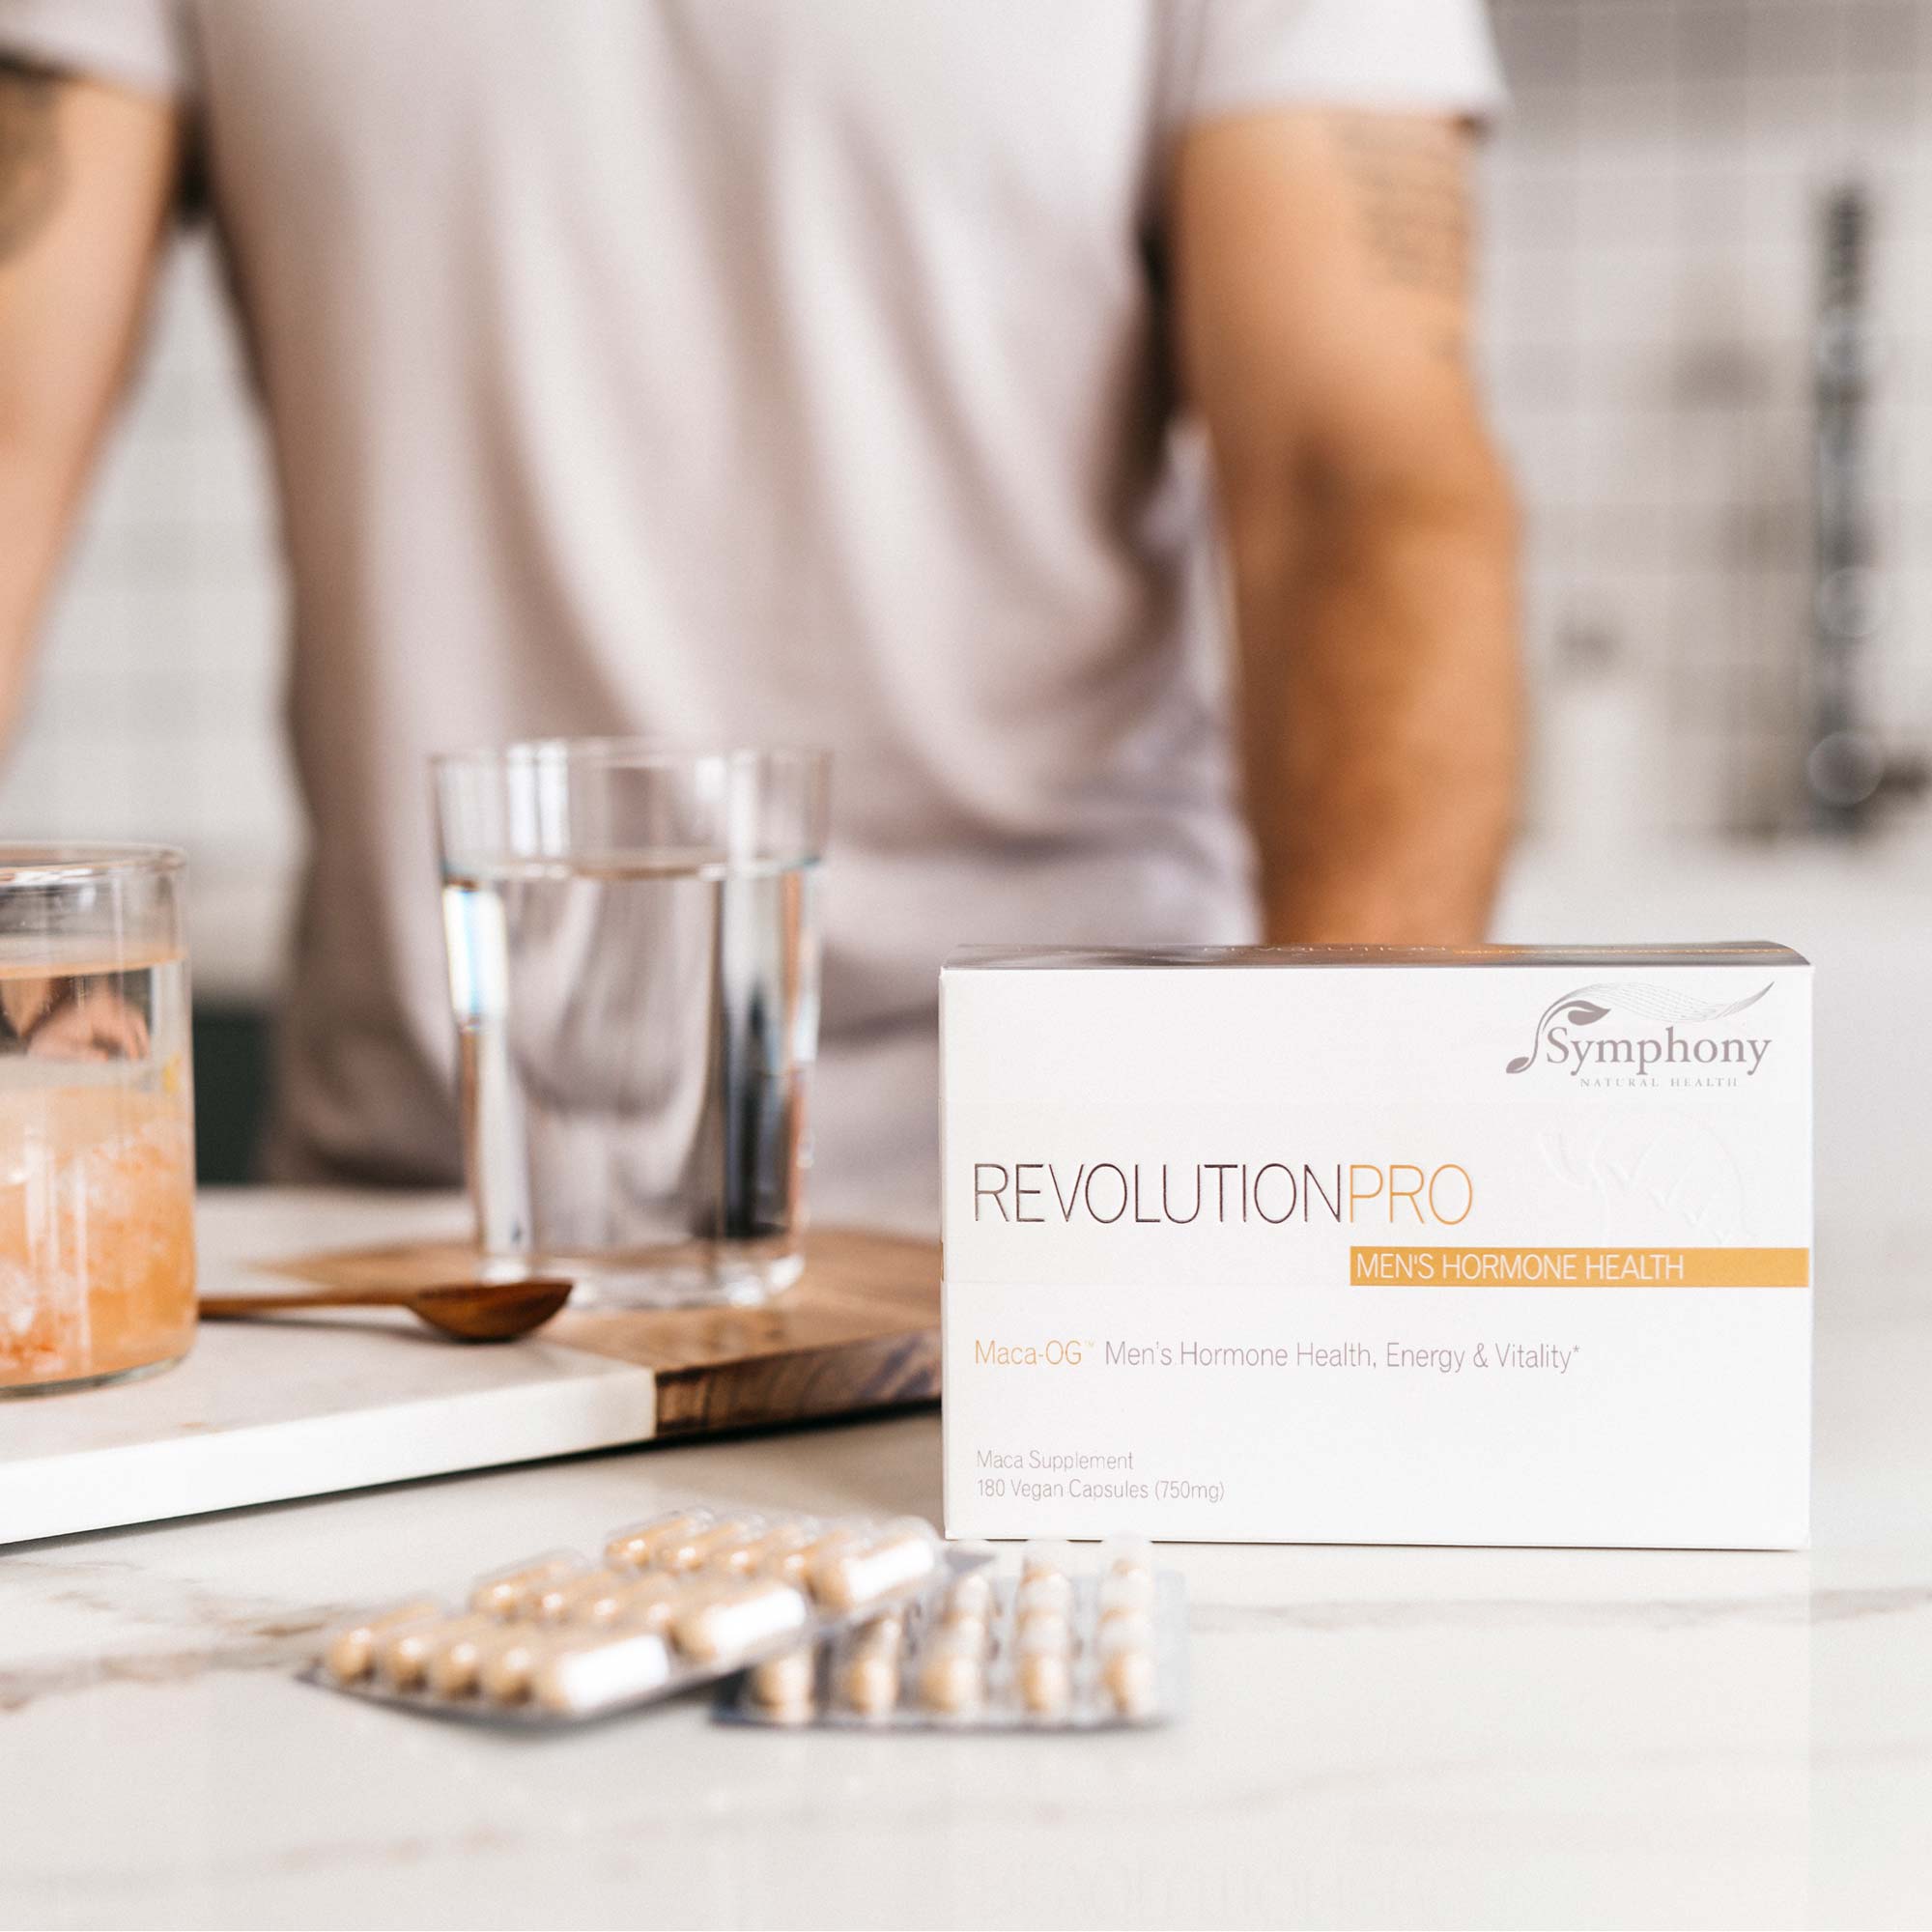 RevolutionPRO Men's hormone health, Energy & Vitality